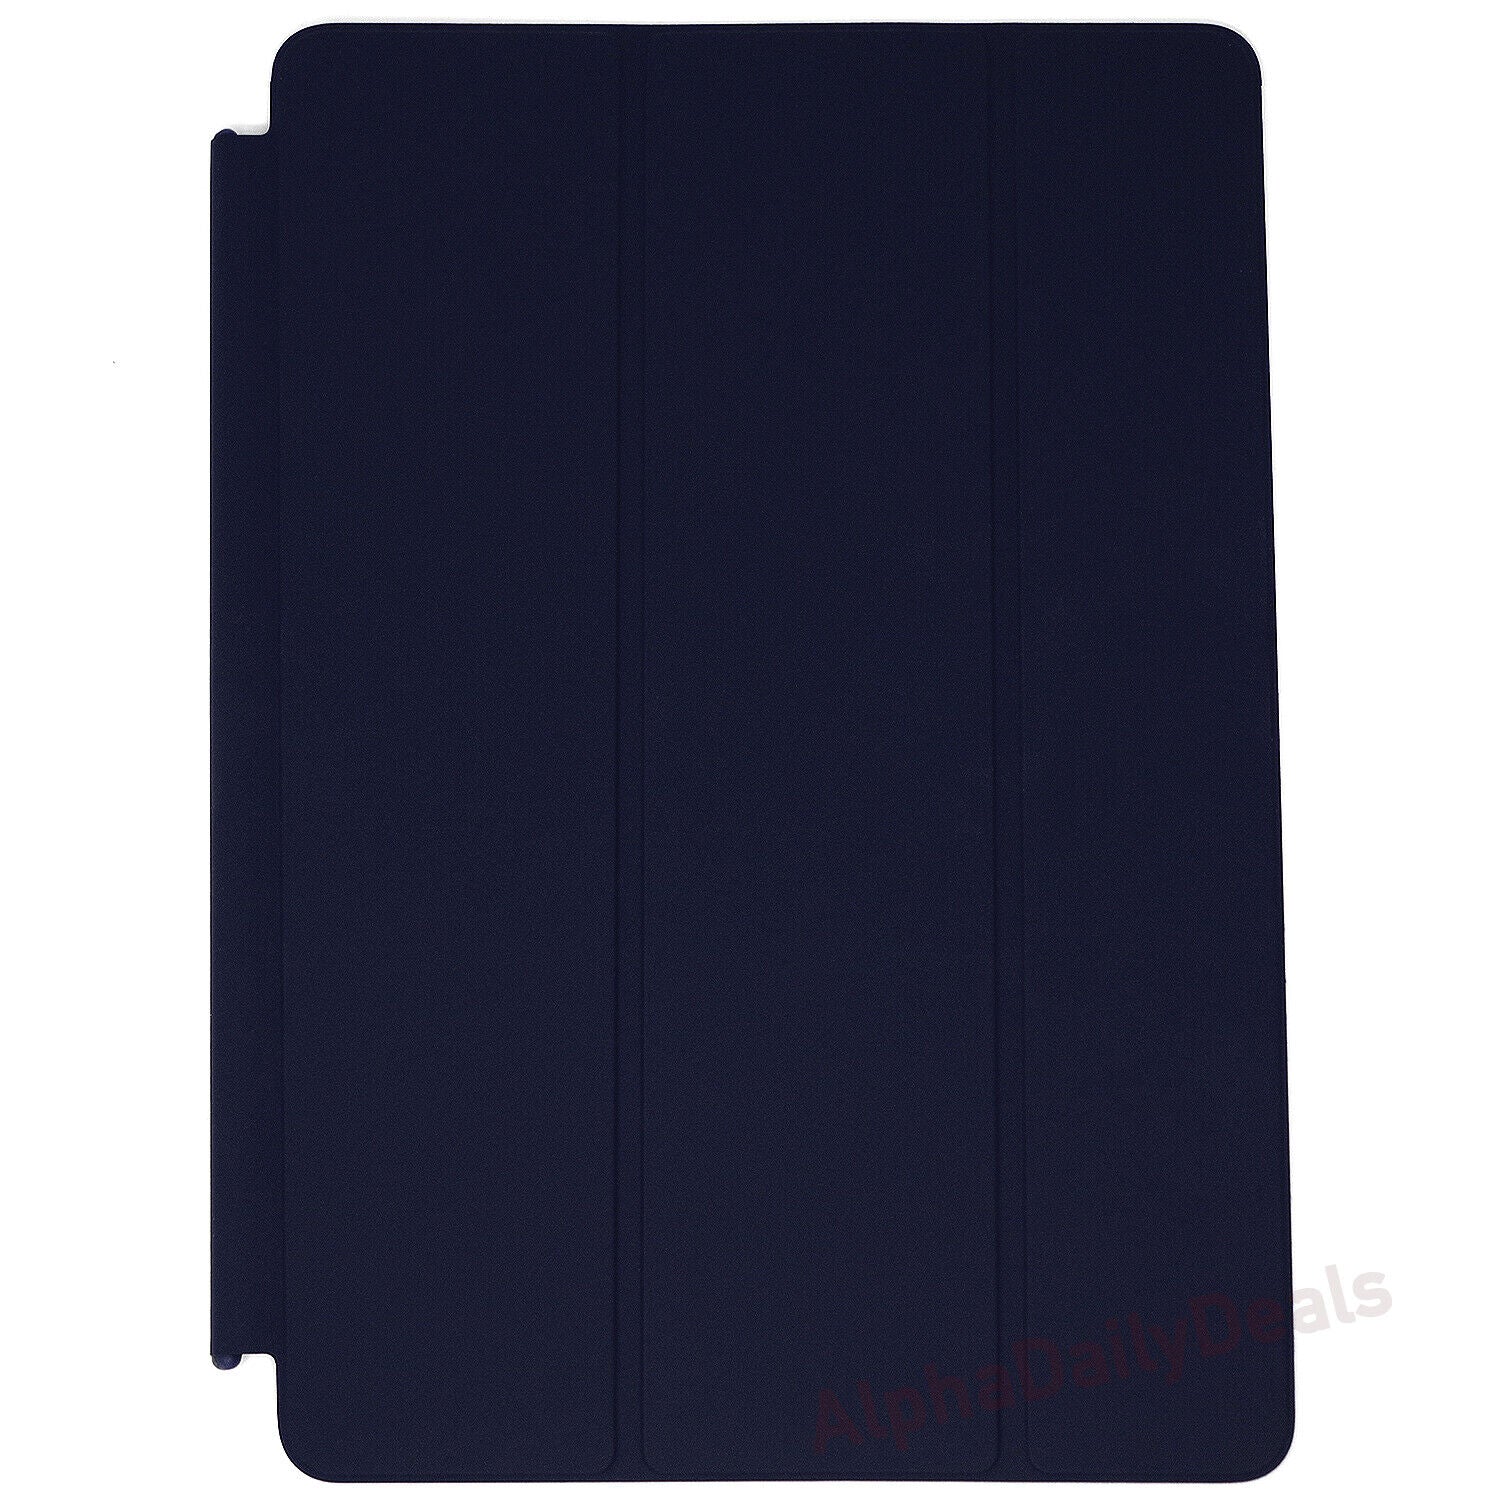 Genuine OEM Apple iPad Pro 10.5-inch Smart Folio Cover - Midnight Blue